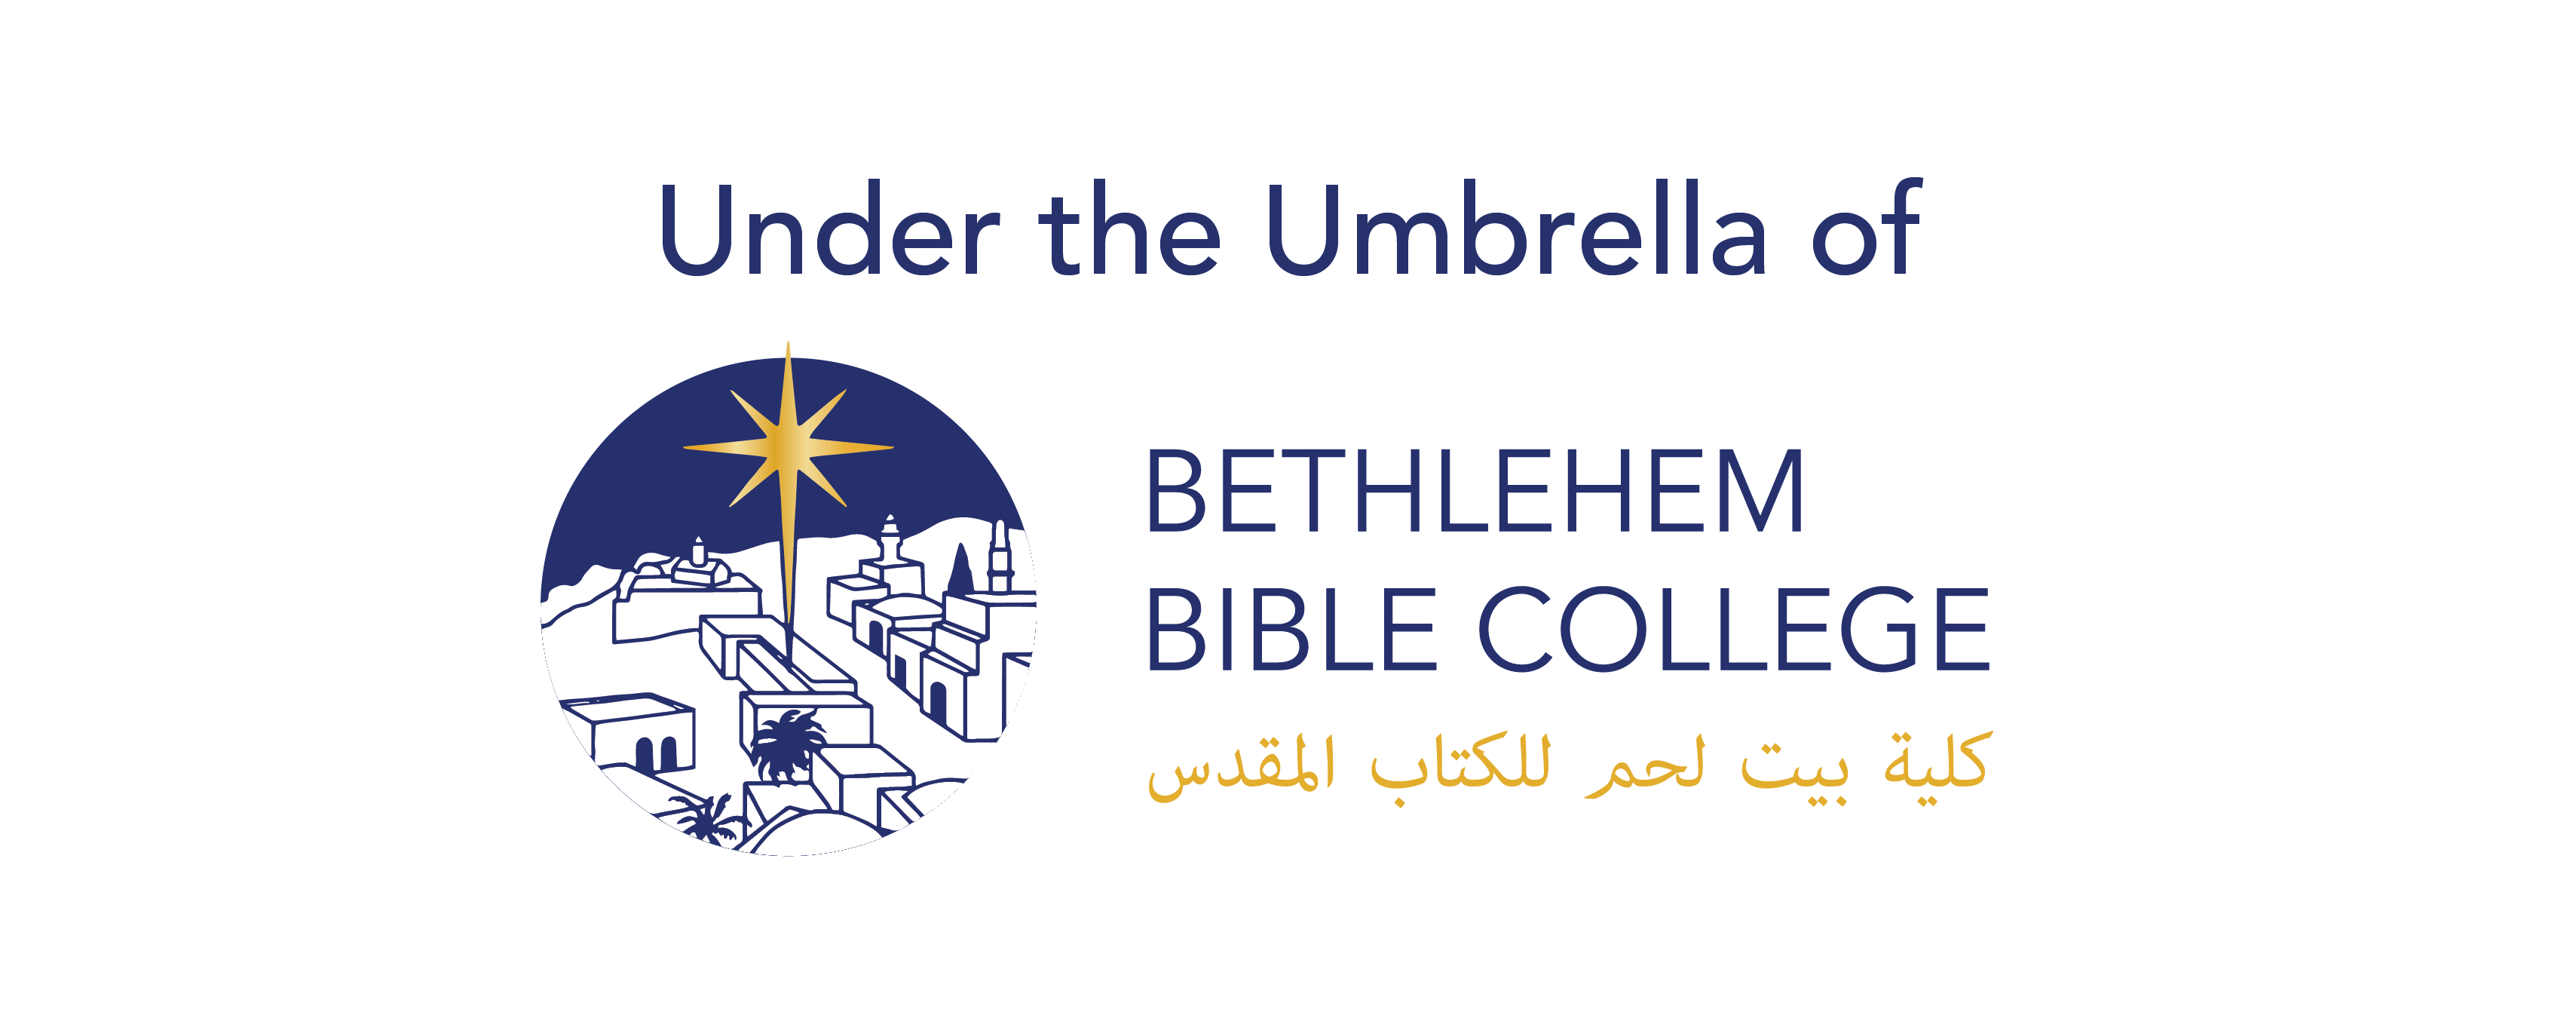 Under the Umbrella of Bethlehem Bible College